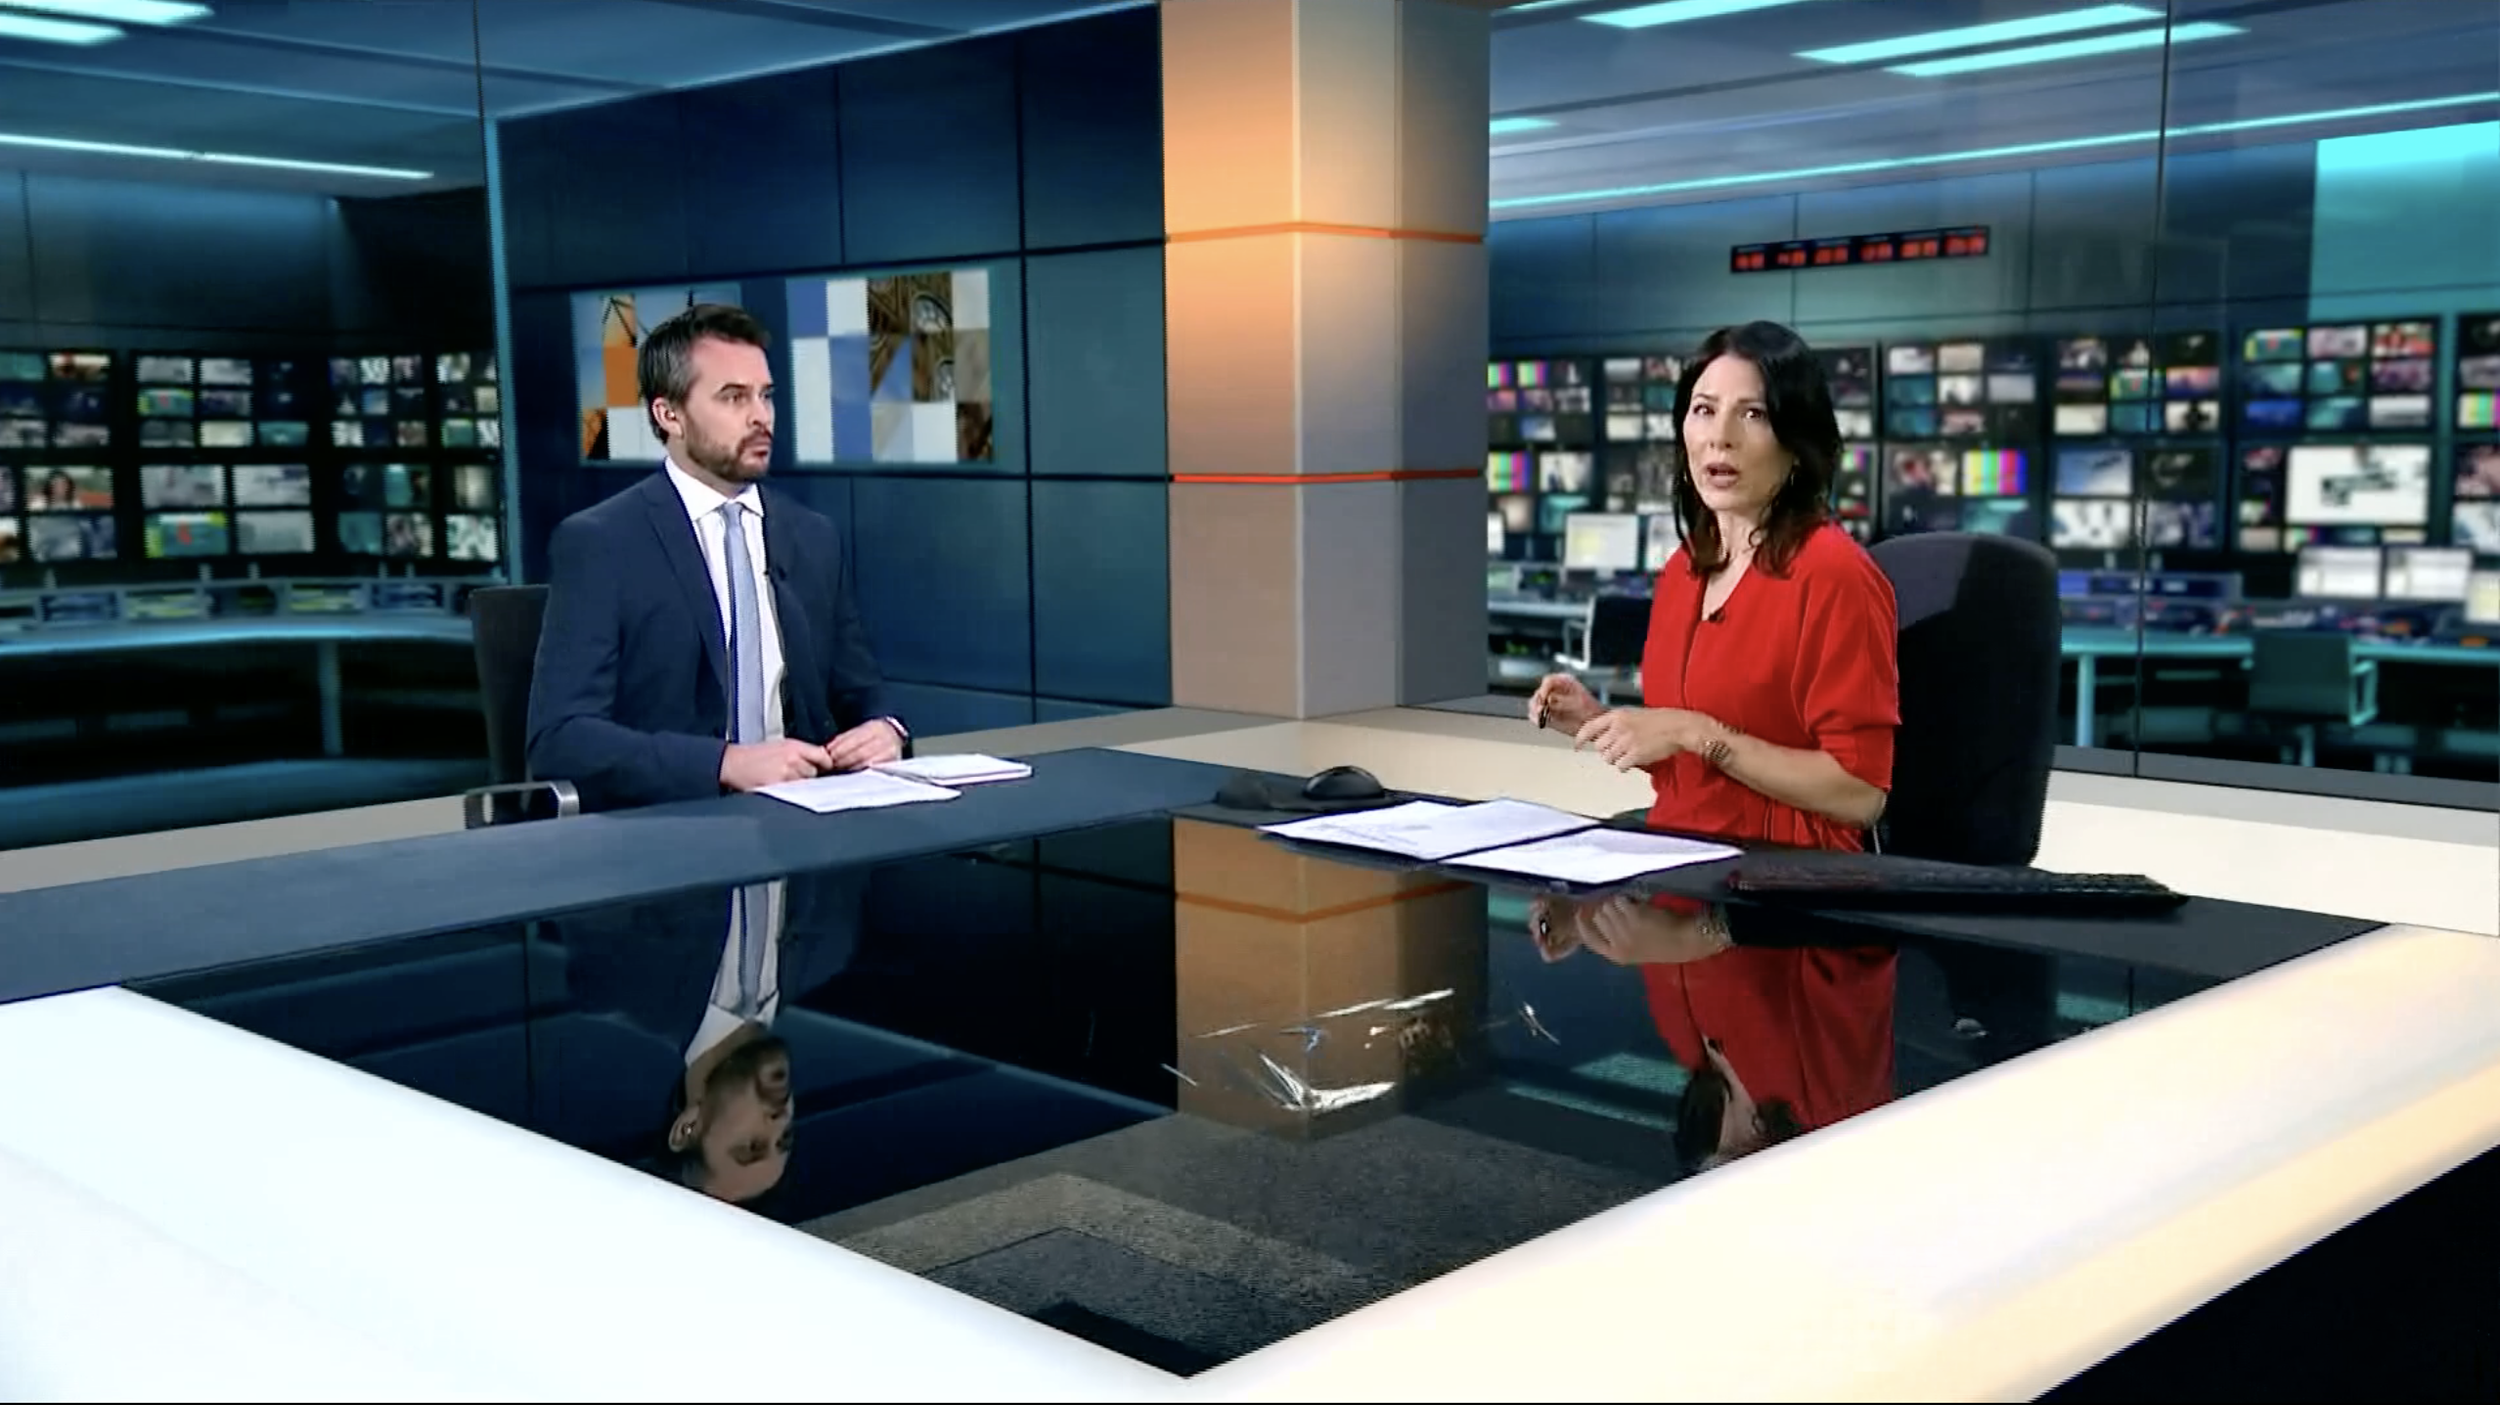 Covering breaking news in the ITV News studio.